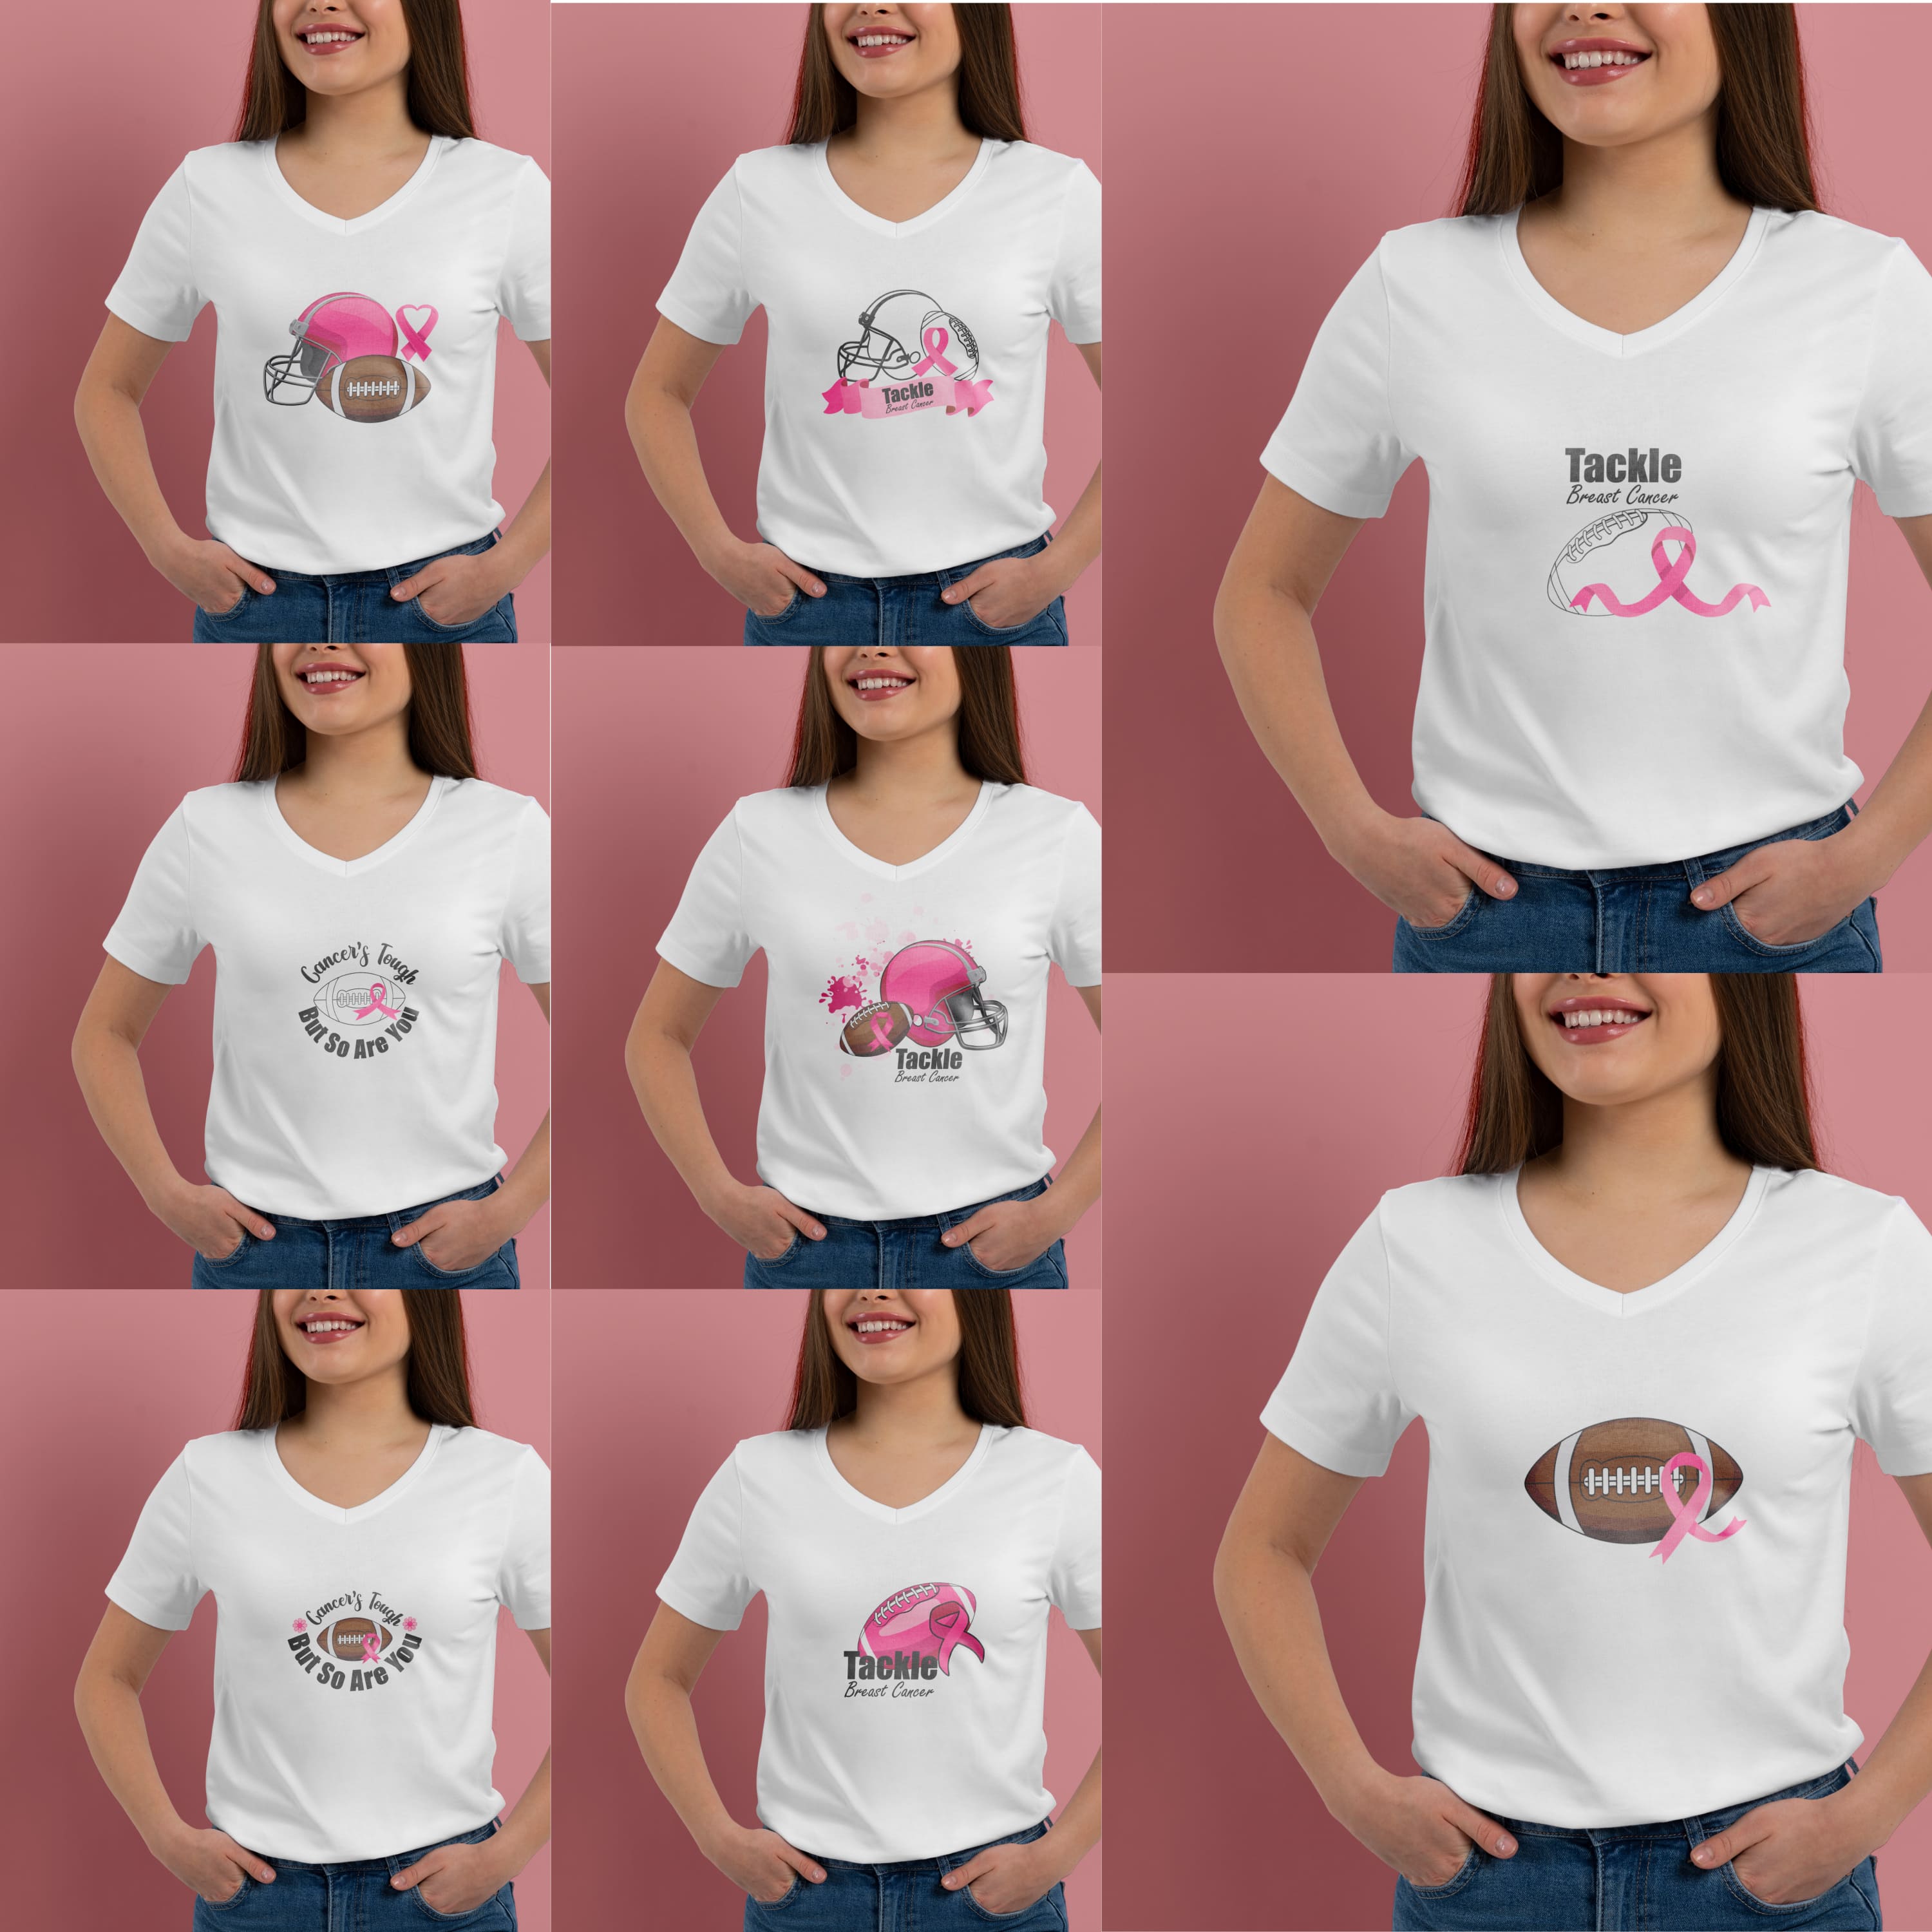 football breast cancer SVG T-shirt Designs Bundle cover.